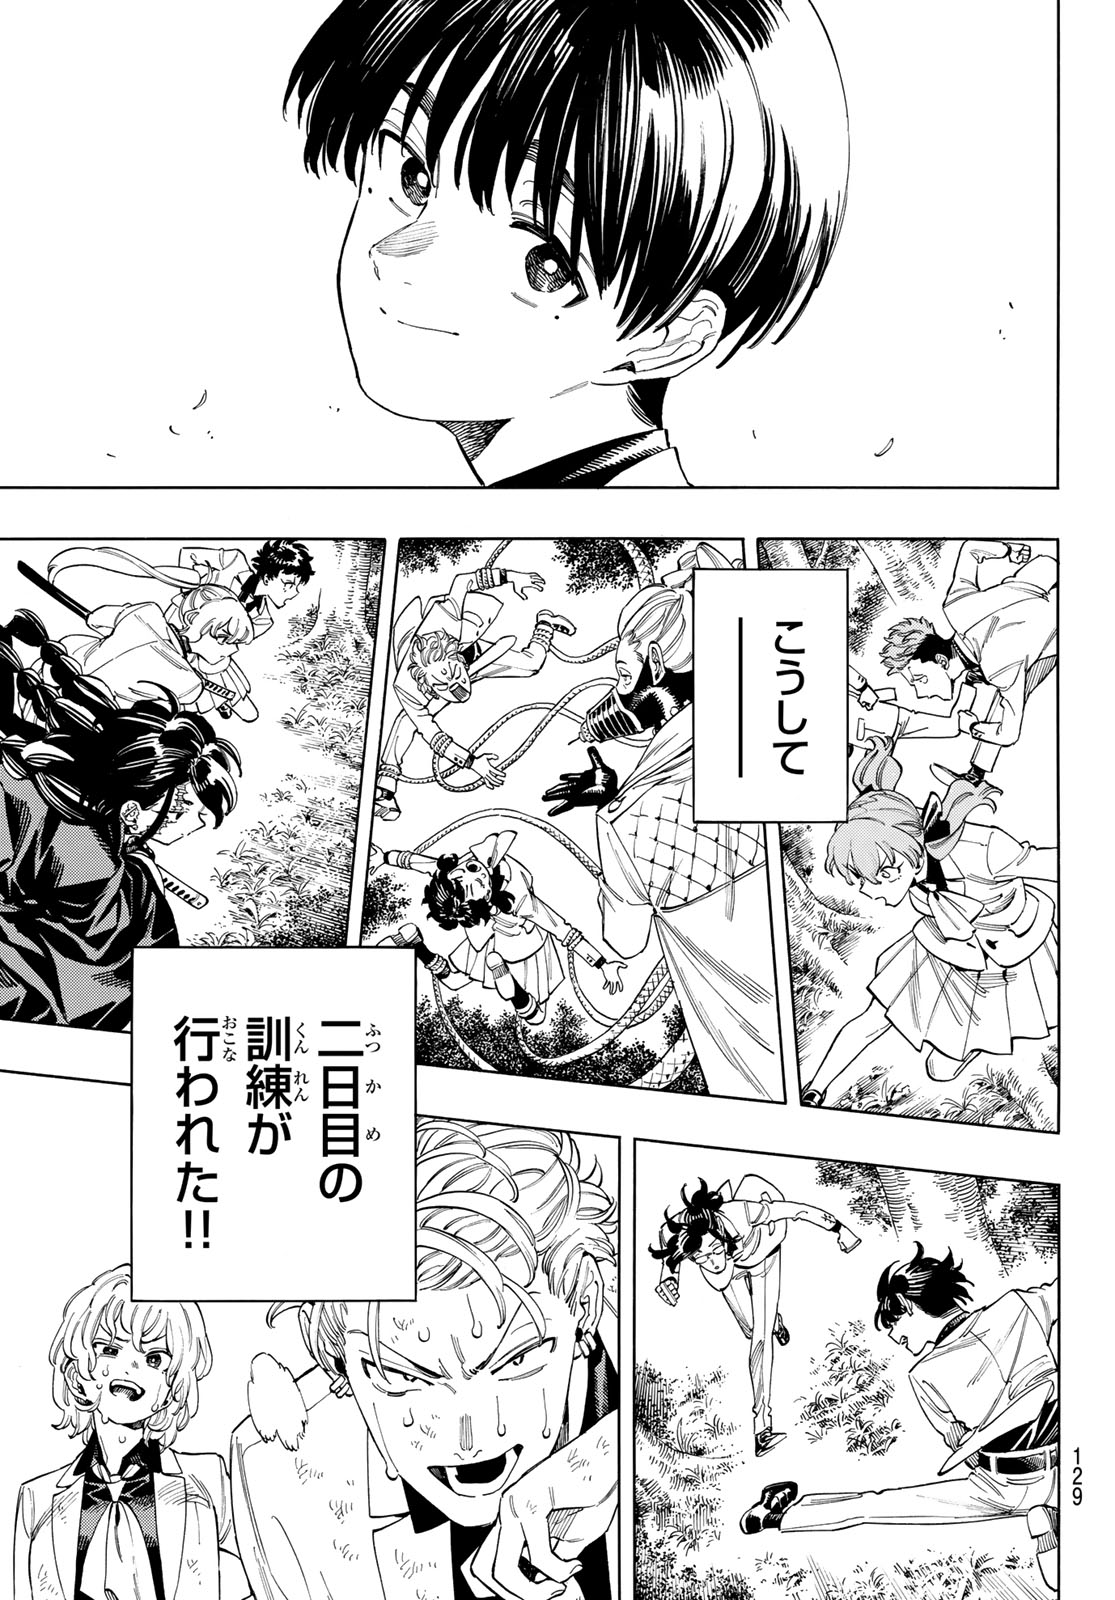 Akabane Honeko no Bodyguard - Chapter 87 - Page 18